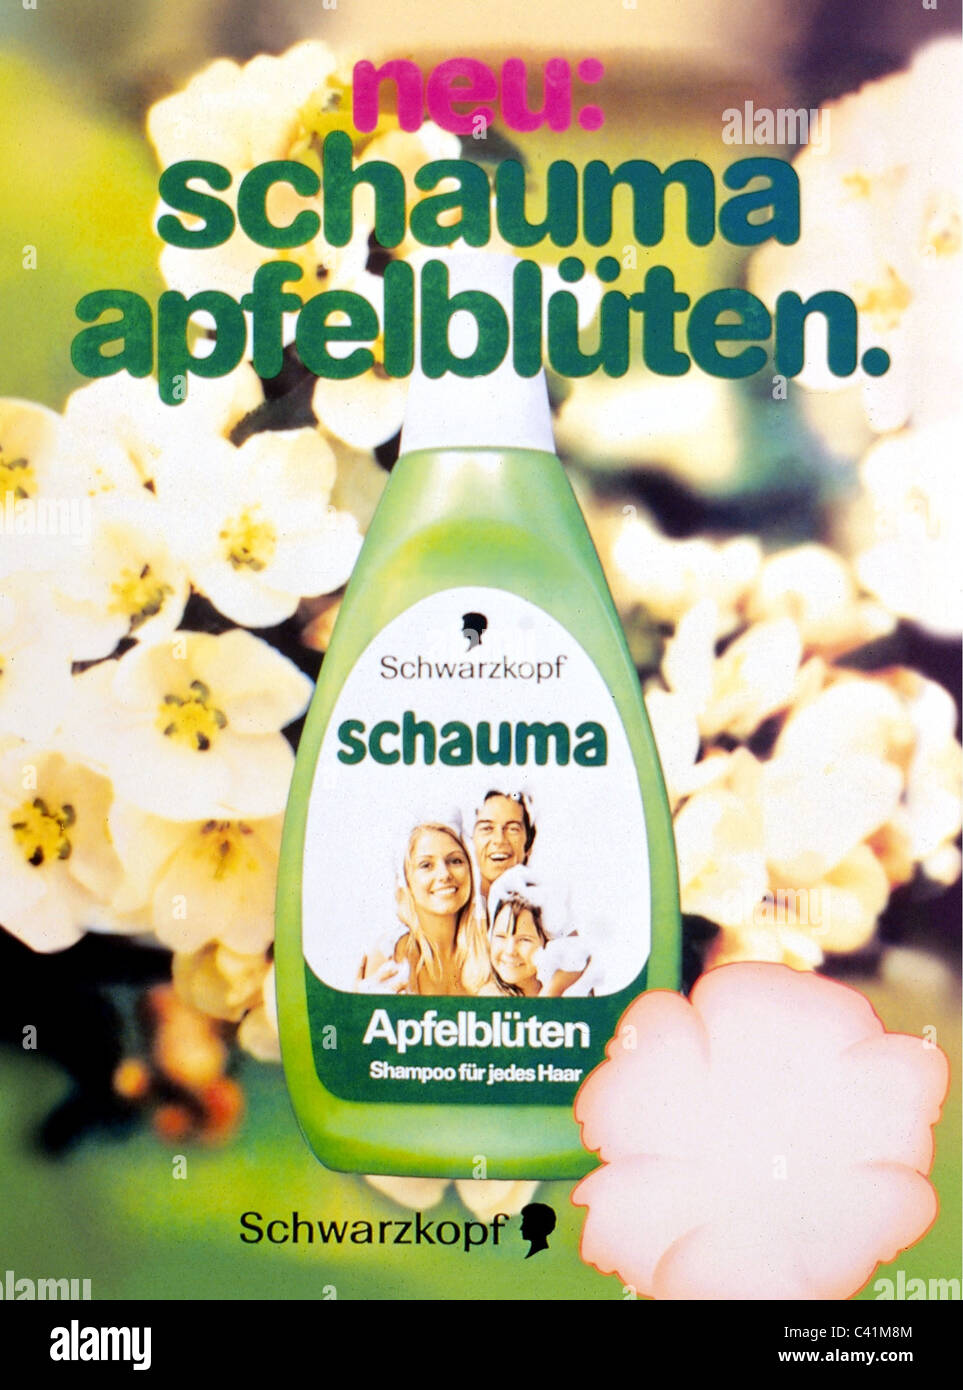 Werbung, Kosmetik, Shampoo, Schwarzkopf, 'Schauma', 1977,  Additional-Rights-Clearences-not available Stockfotografie - Alamy